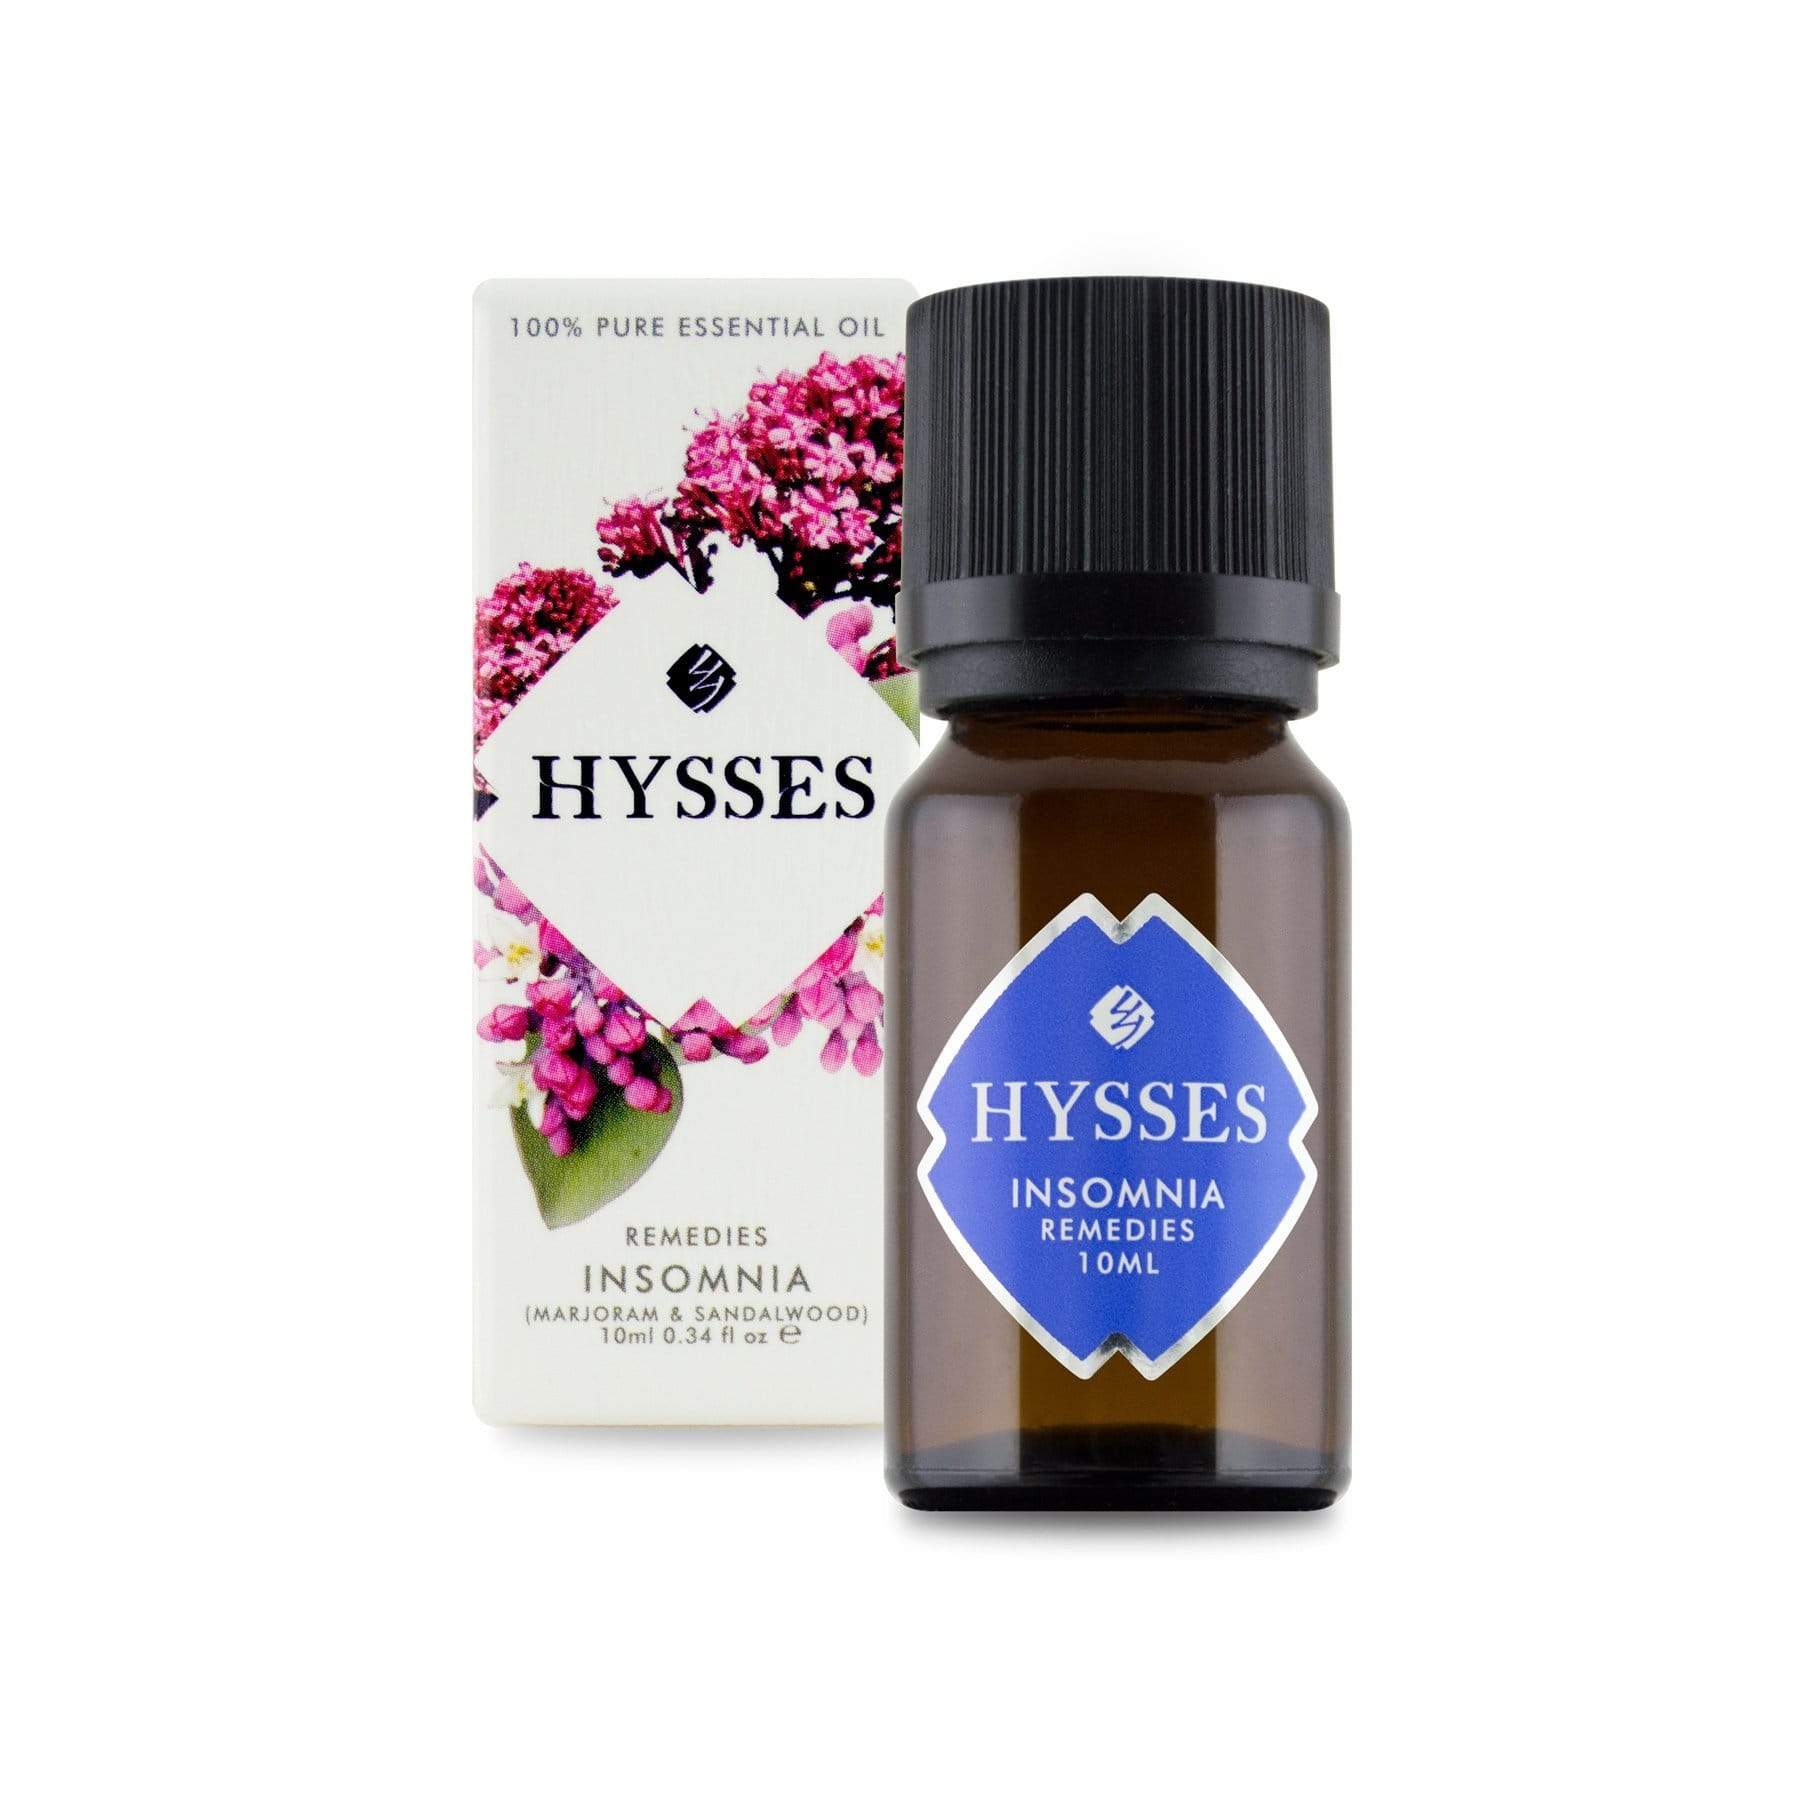 Hysses Essential Oil 10ml Remedies, Insomnia